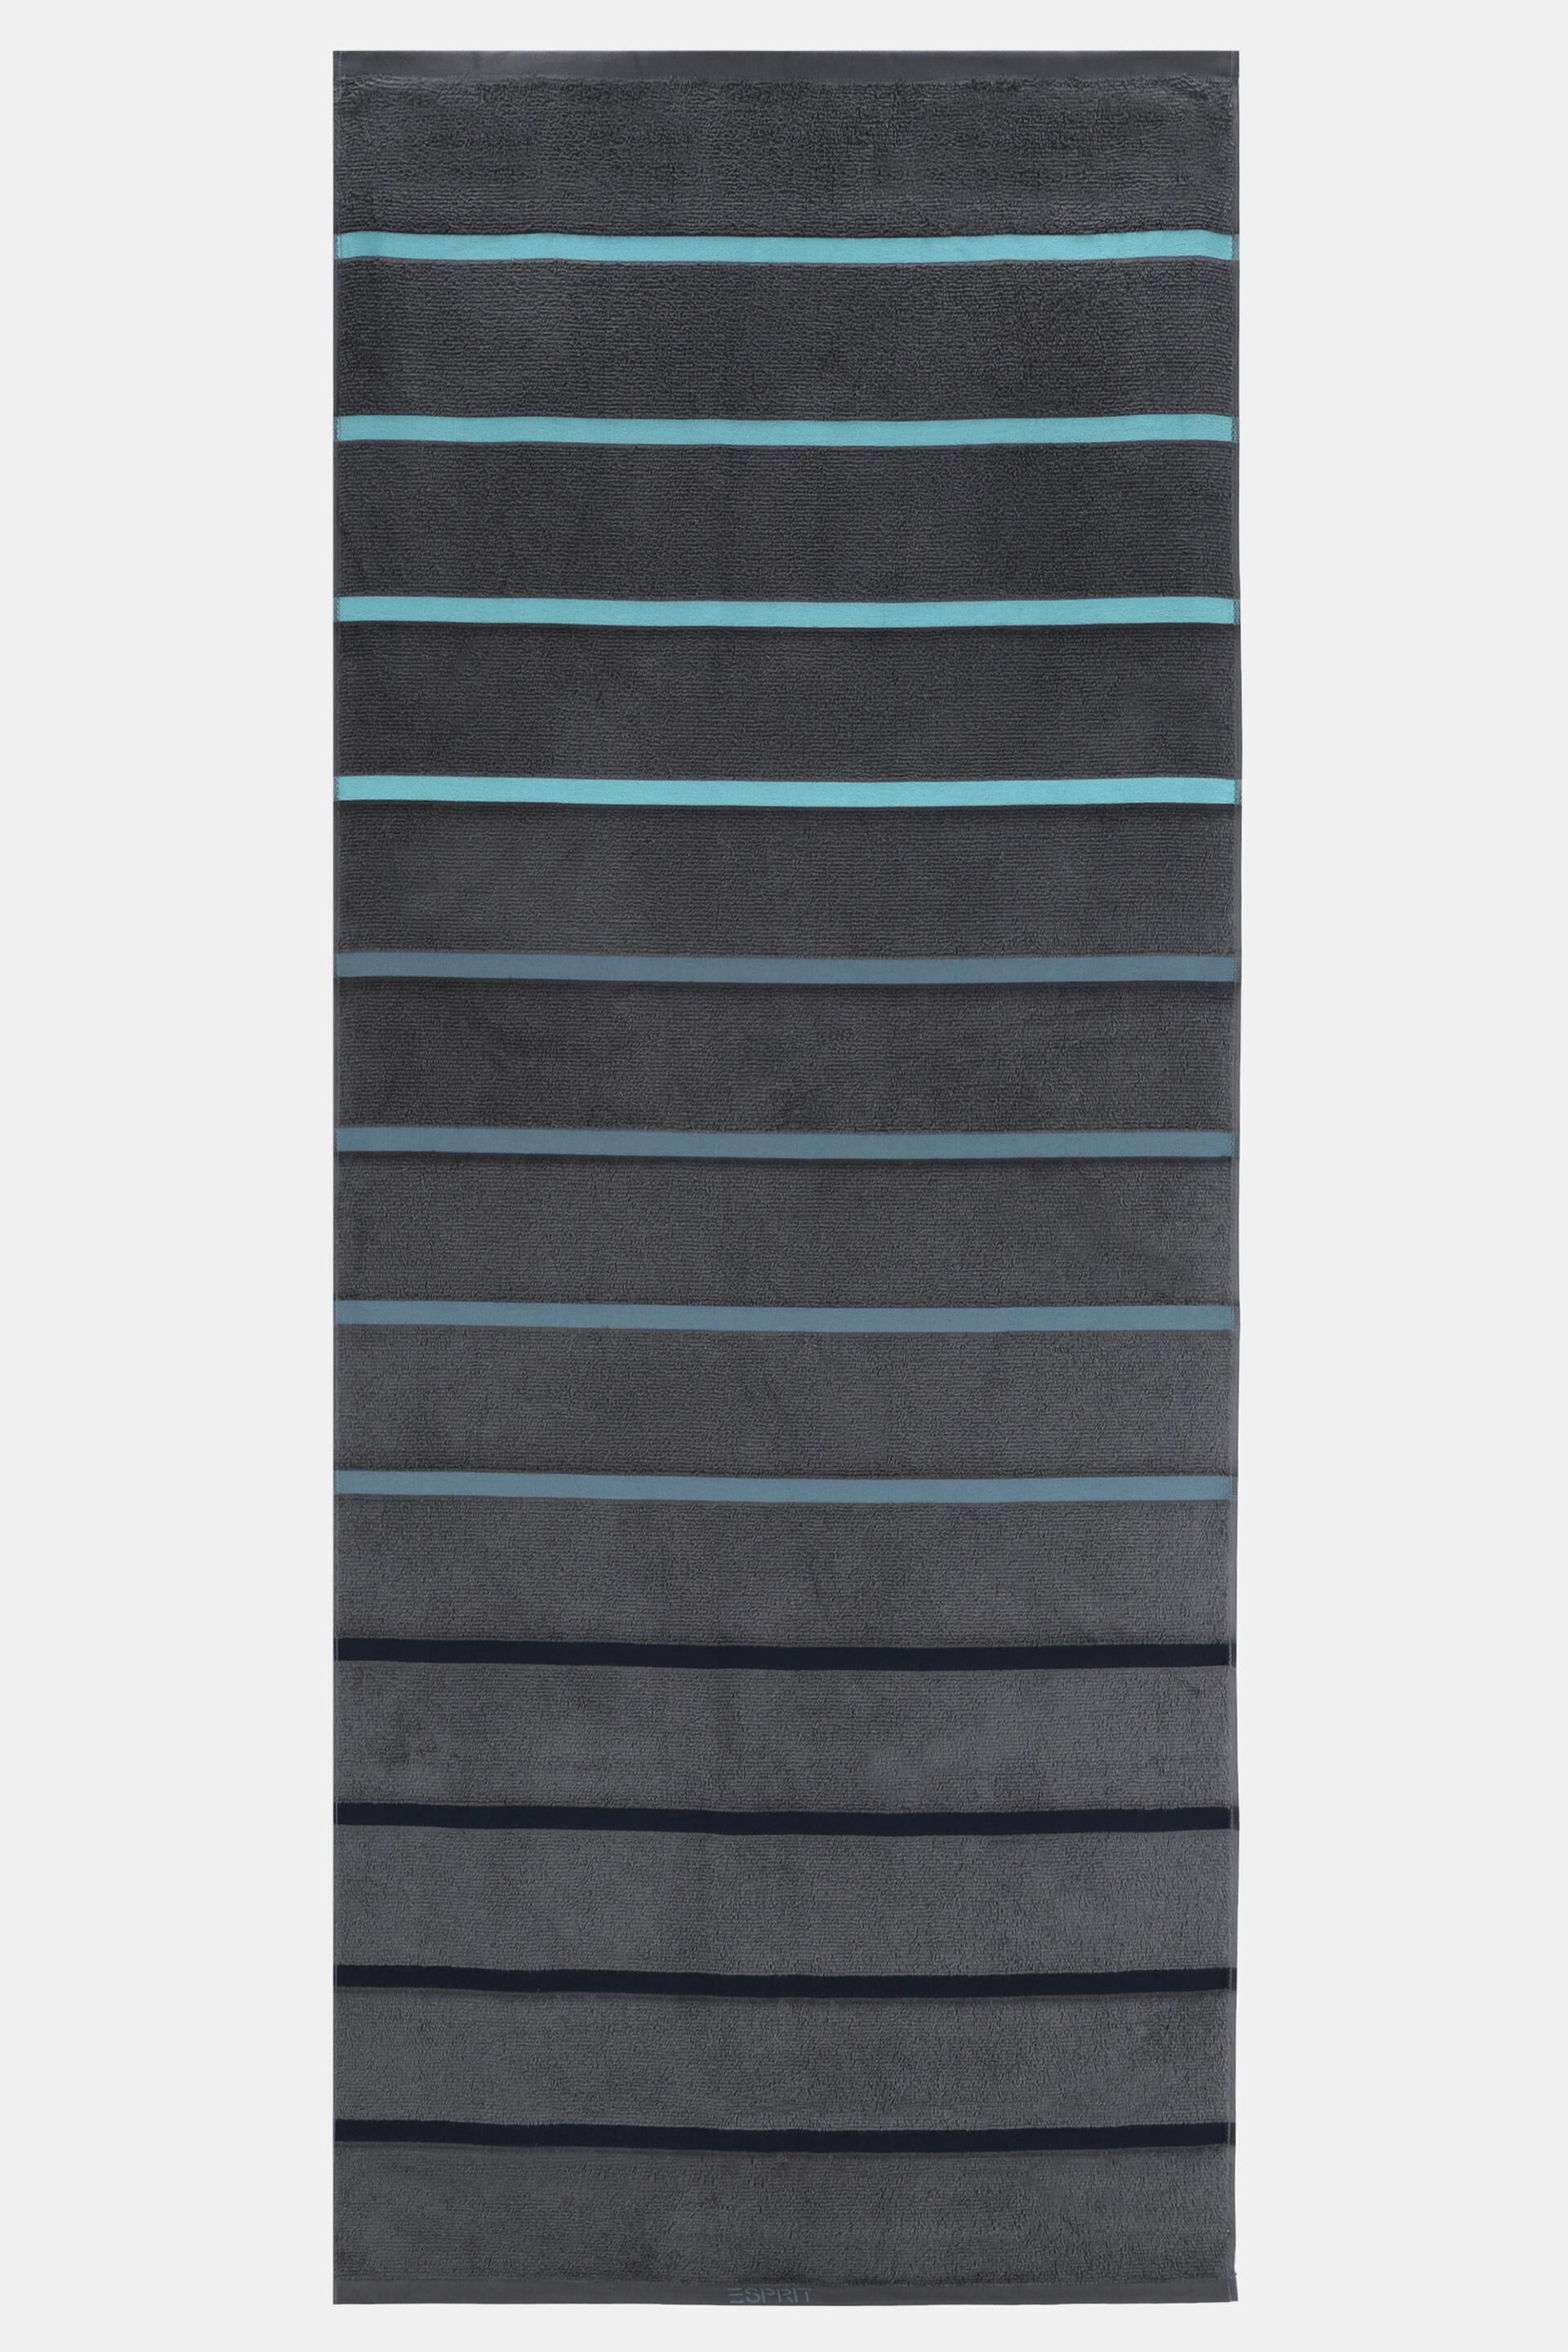 Esprit towel Relax sauna stripes with